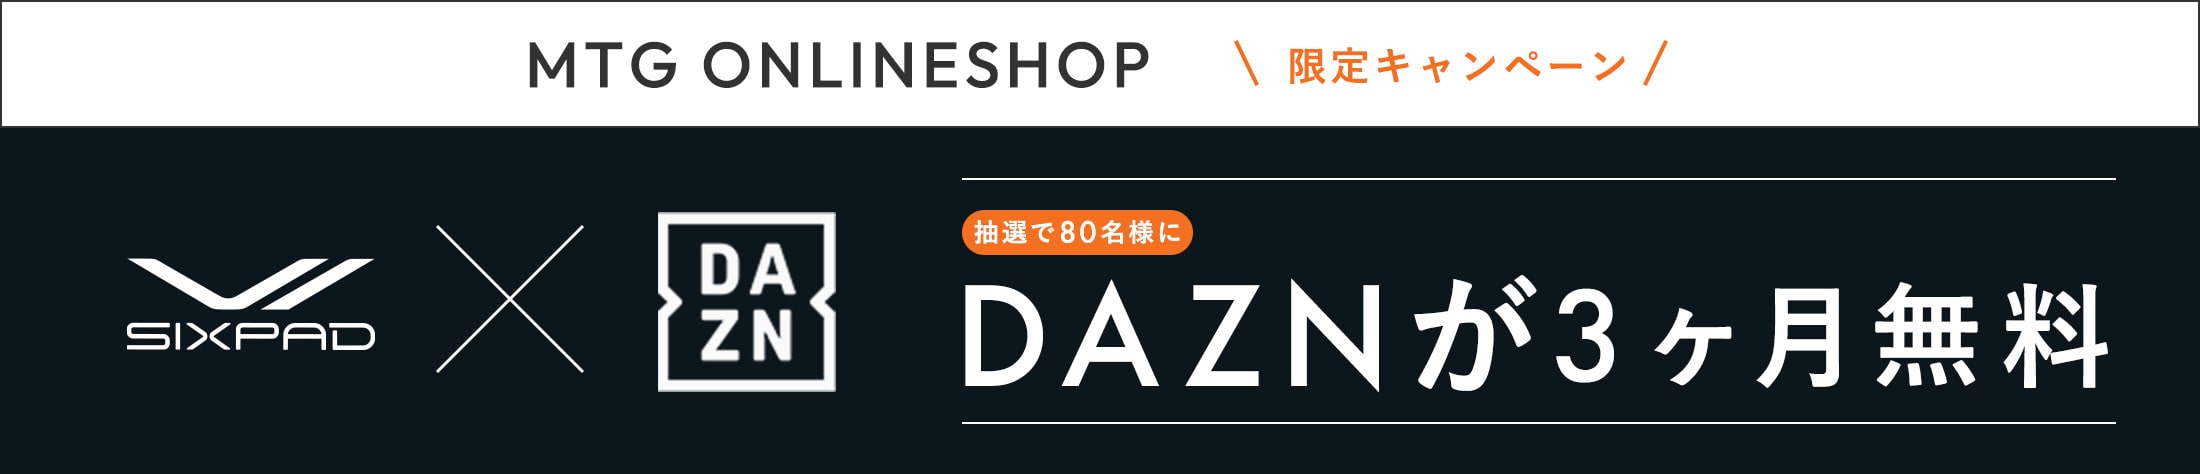 MTG ONLINESHOP 限定キャンペーン 抽選で80名様に DAZNが3ヶ月無料